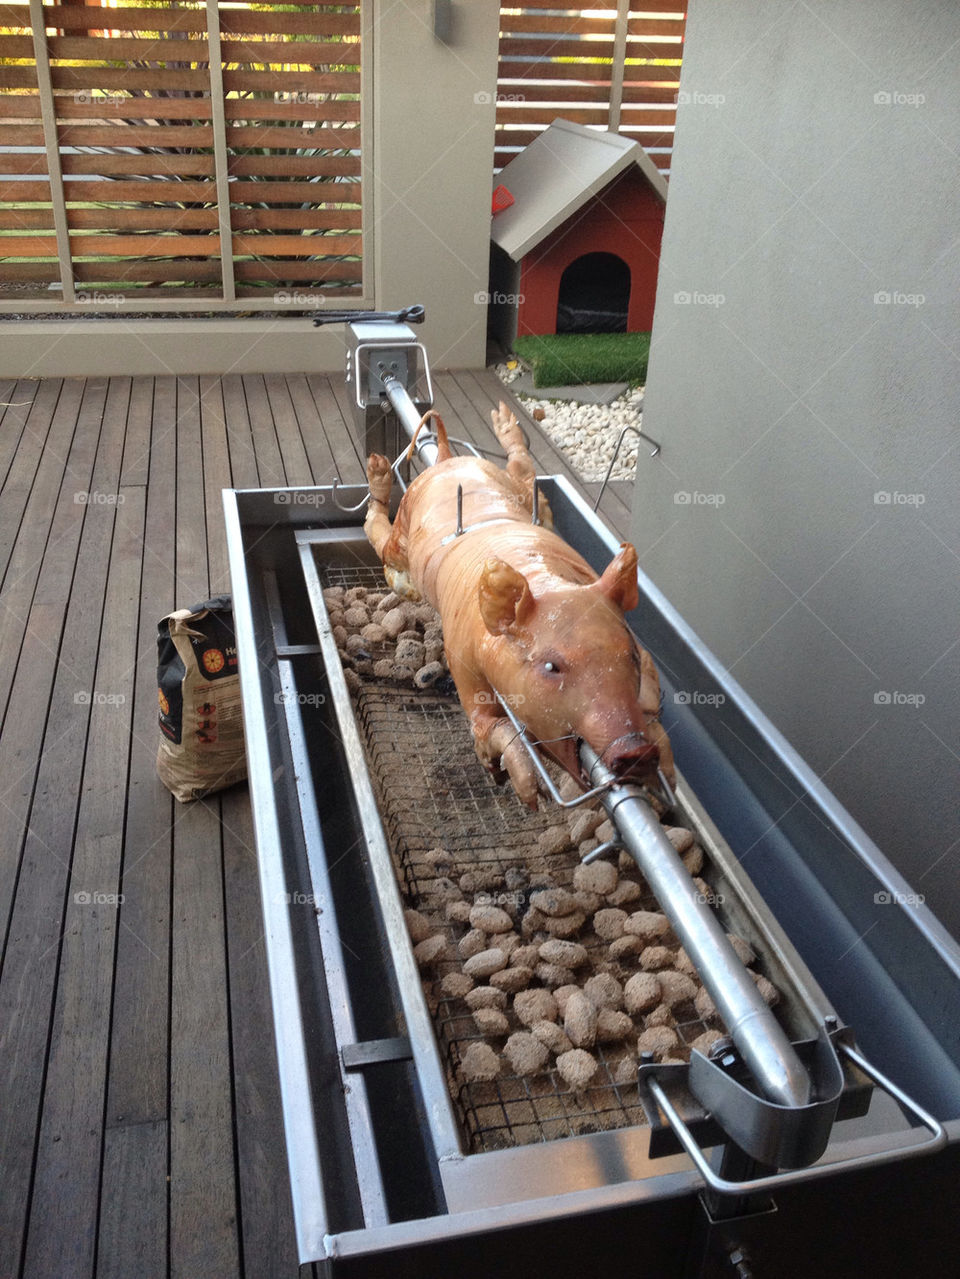 food pig backyard roast by splicanka